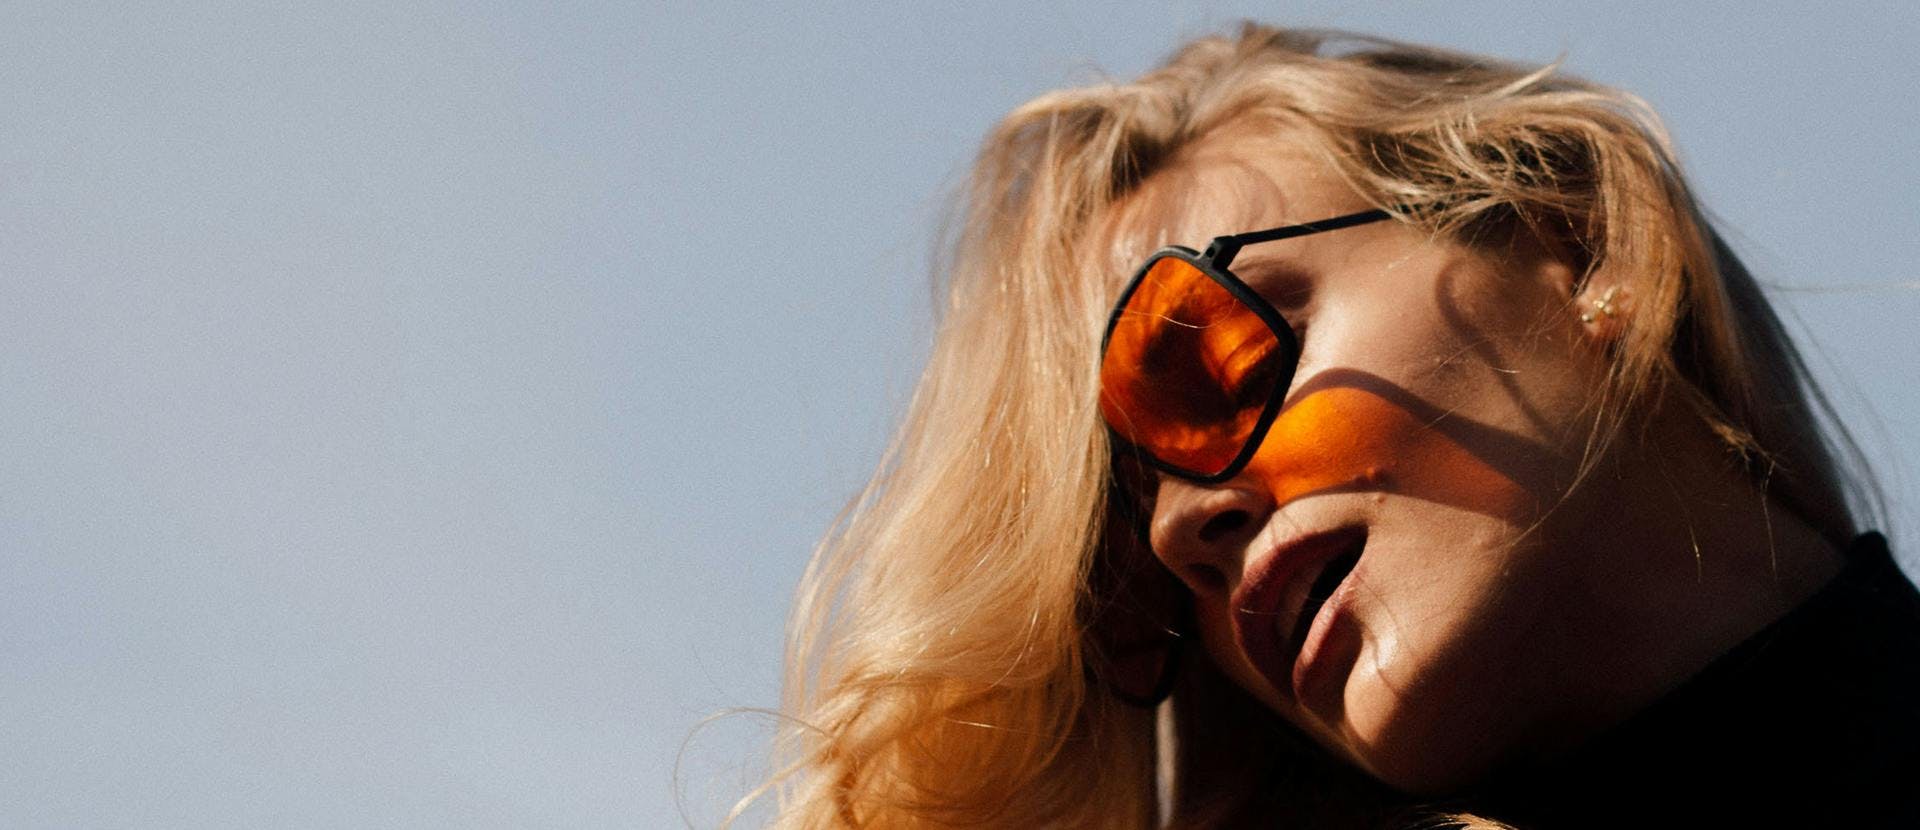 person teen female kid blonde face sunglasses accessories glasses smile